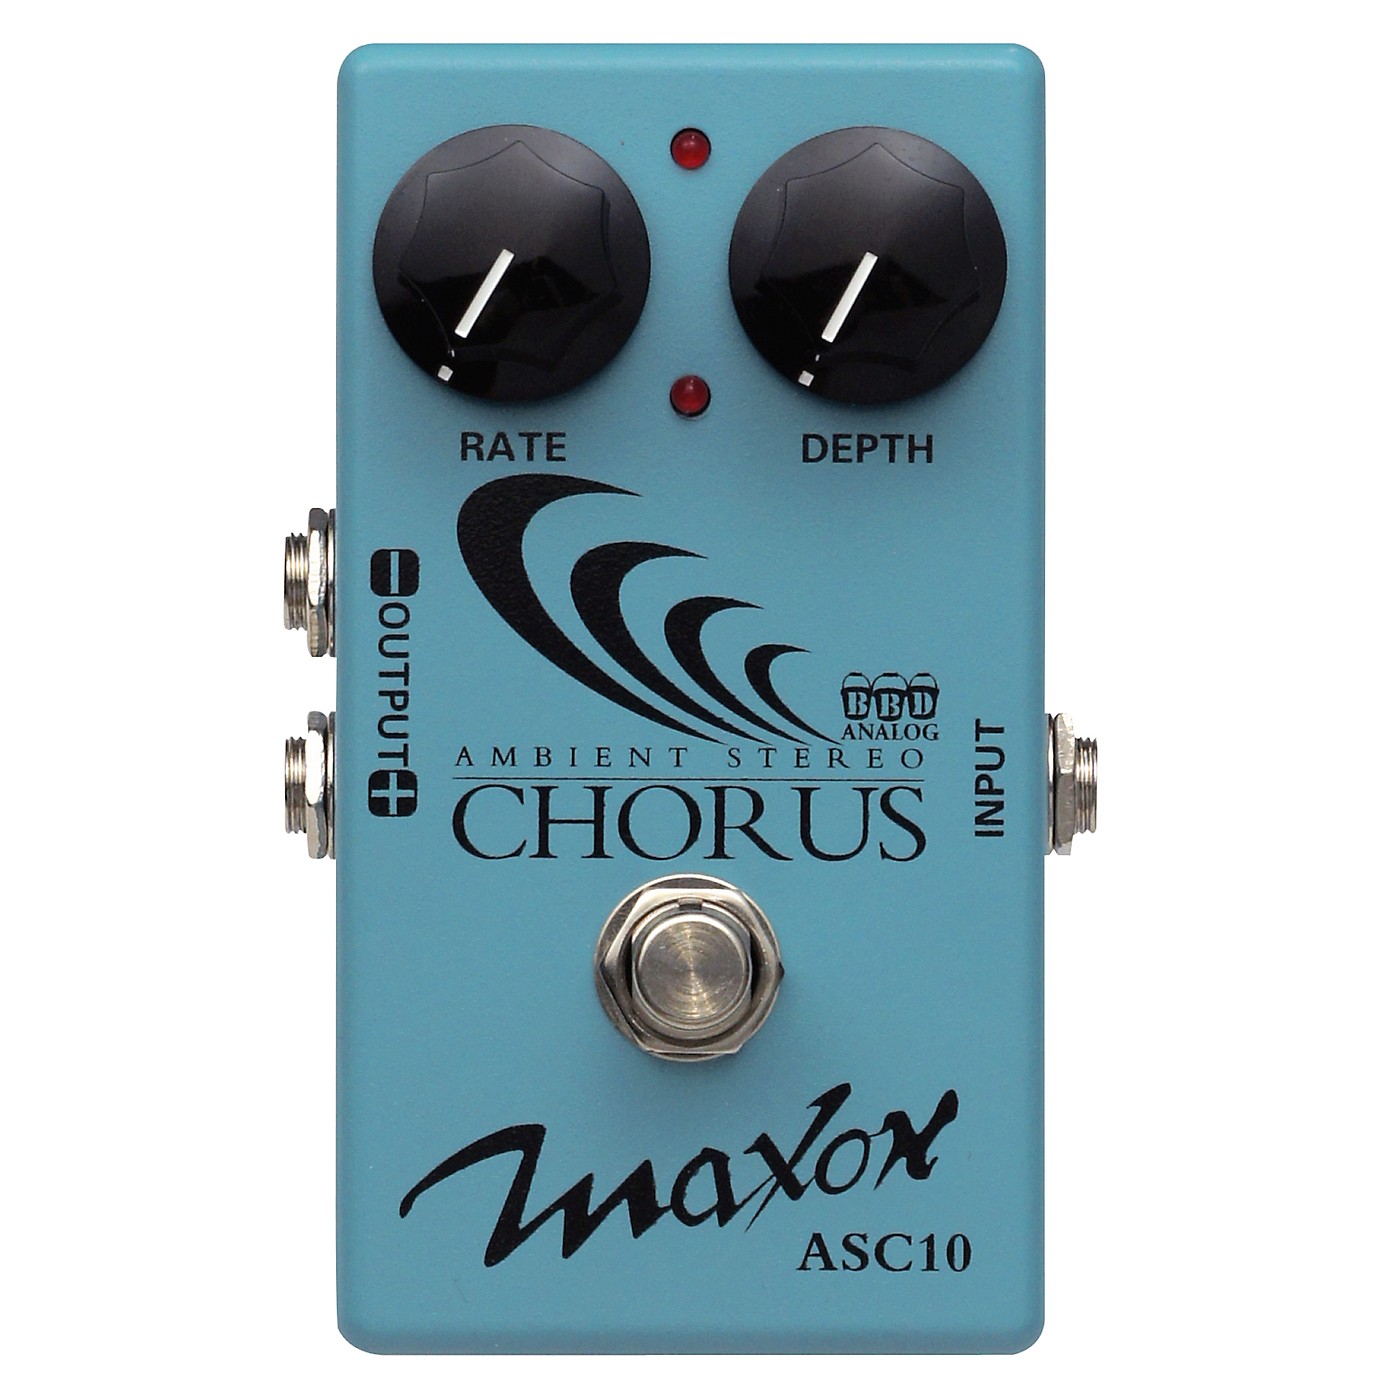 Maxon Compact Series Ambient Stereo Chorus Guitar Effects Pedal thumbnail